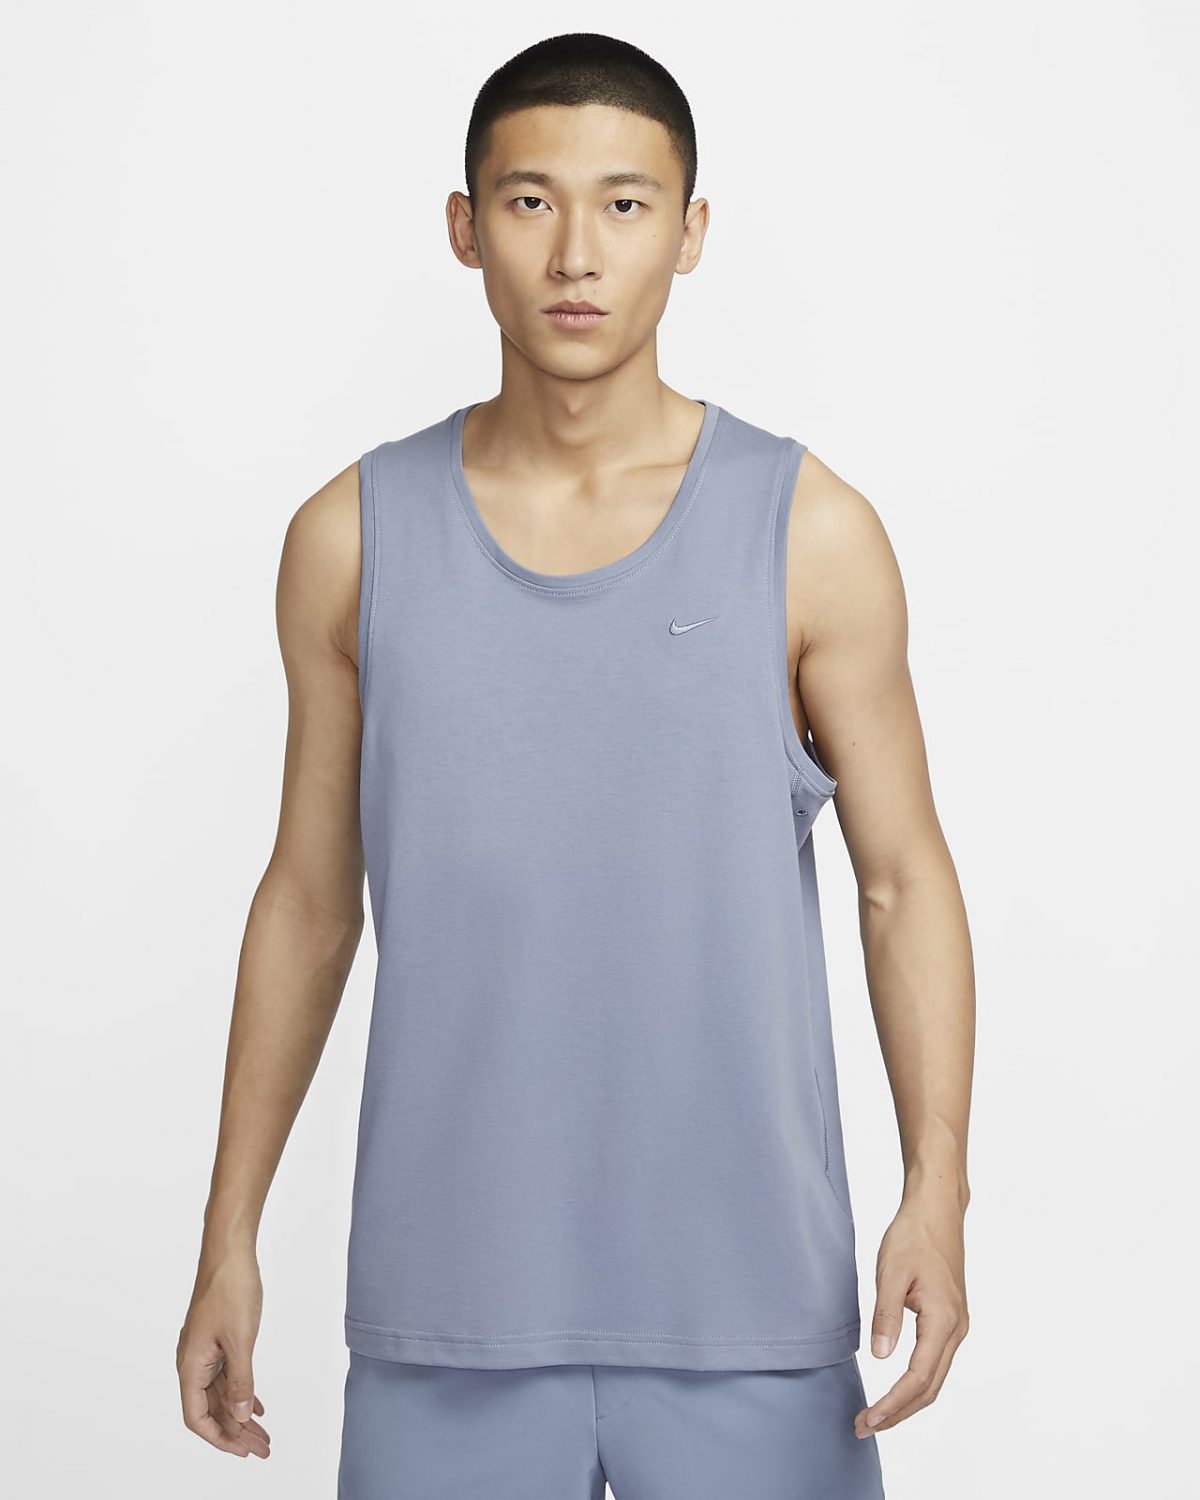 Мужская спортивная одежда Nike Primary синяя фото